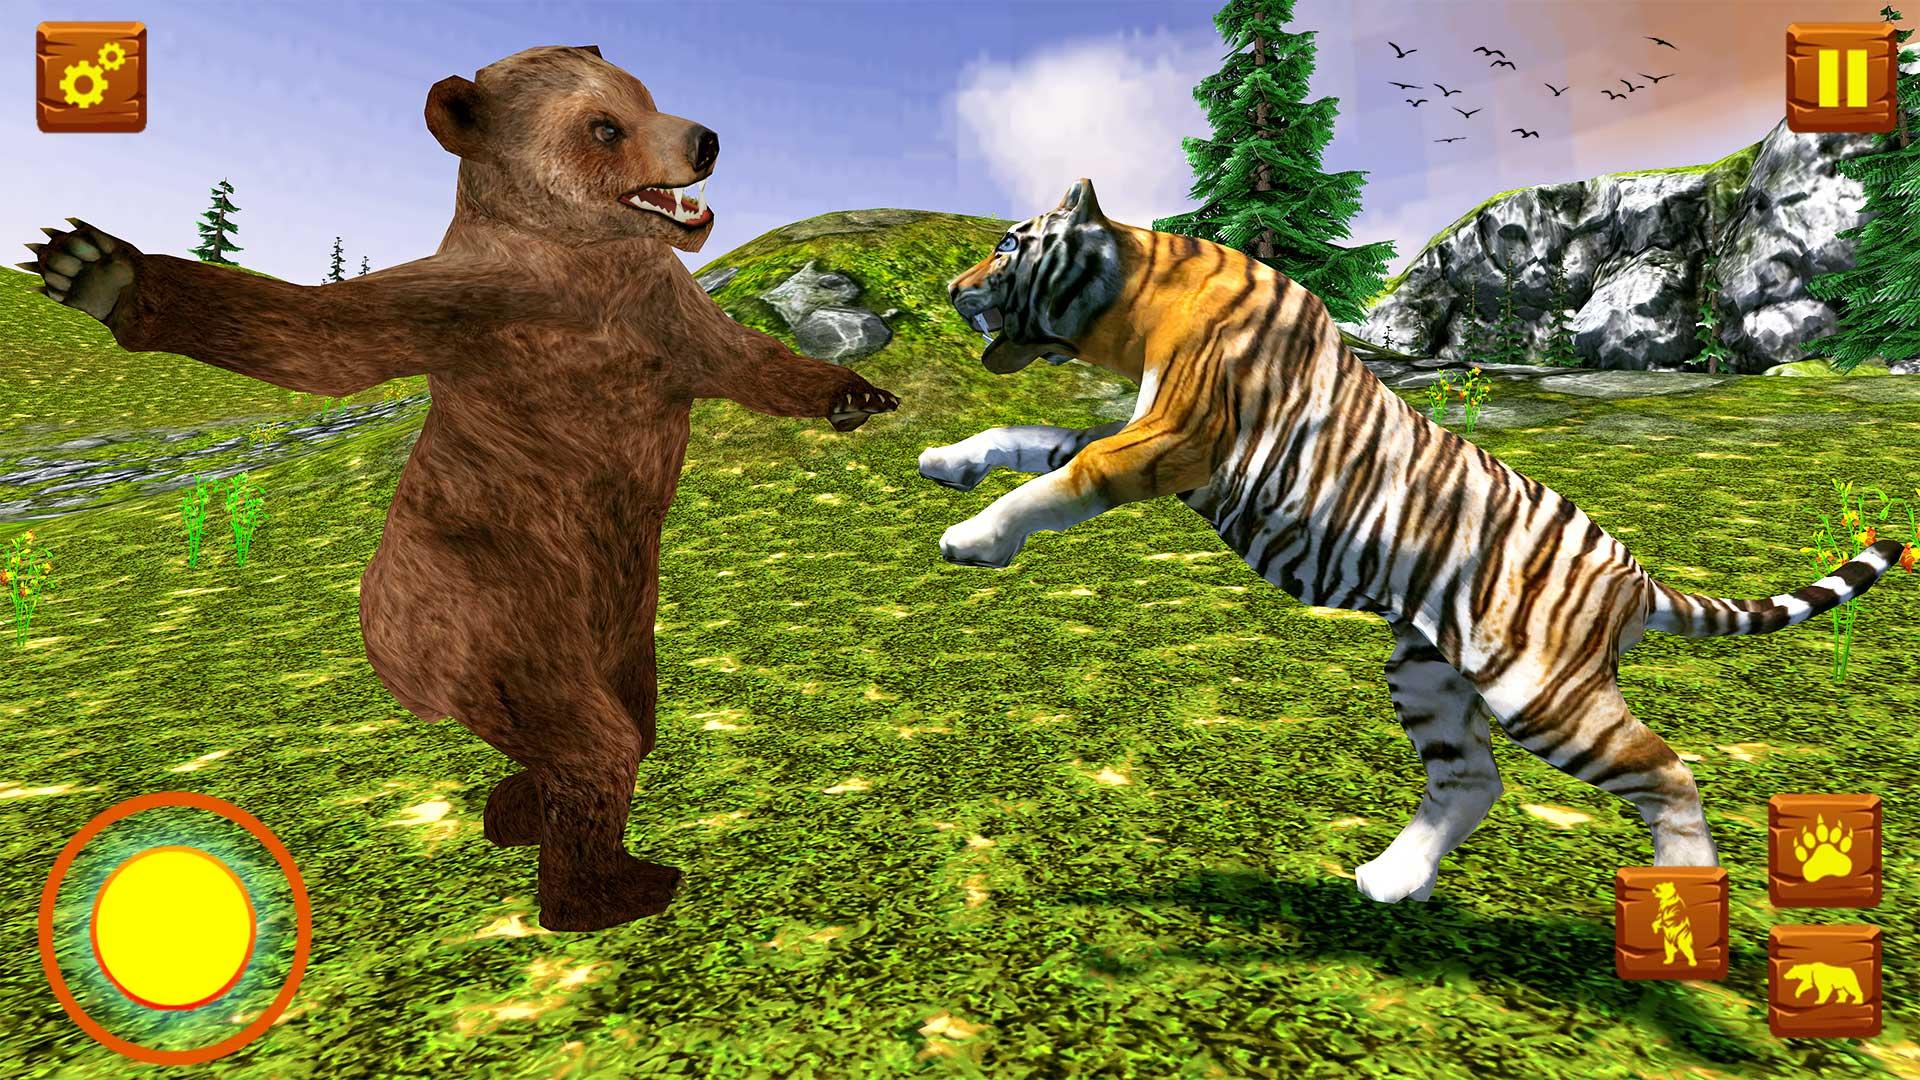 Симулятор зверей все открыто. Симулятор зверей. Симулятор медведя. Игры симуляторы животных. Симулятор медведя the Wilds.